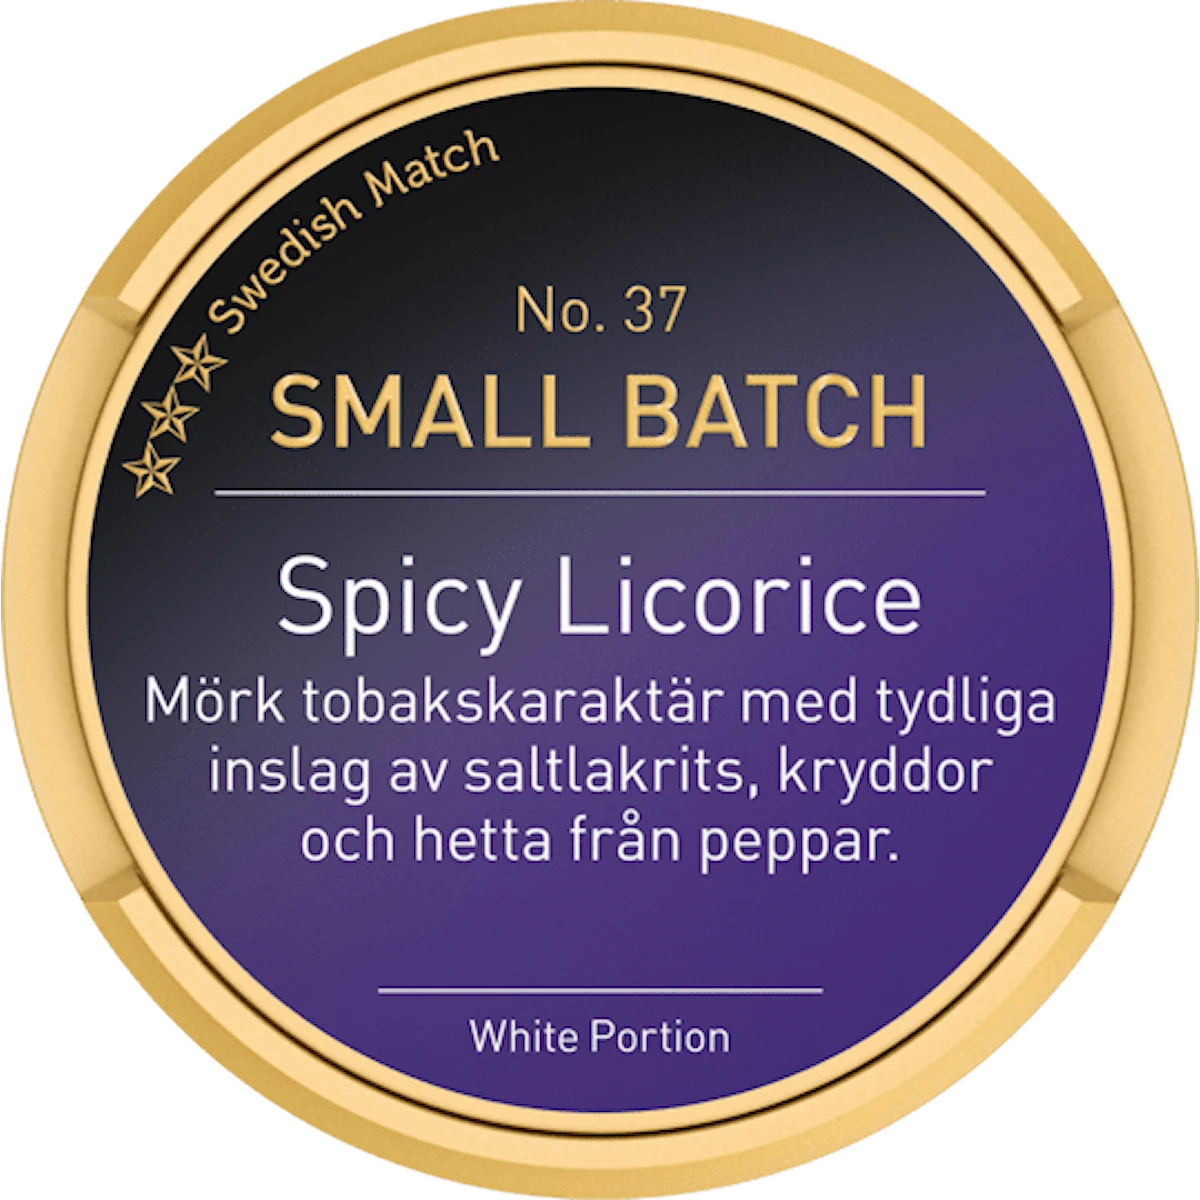 Small Batch No. 37 Spicy Licorice White Portion